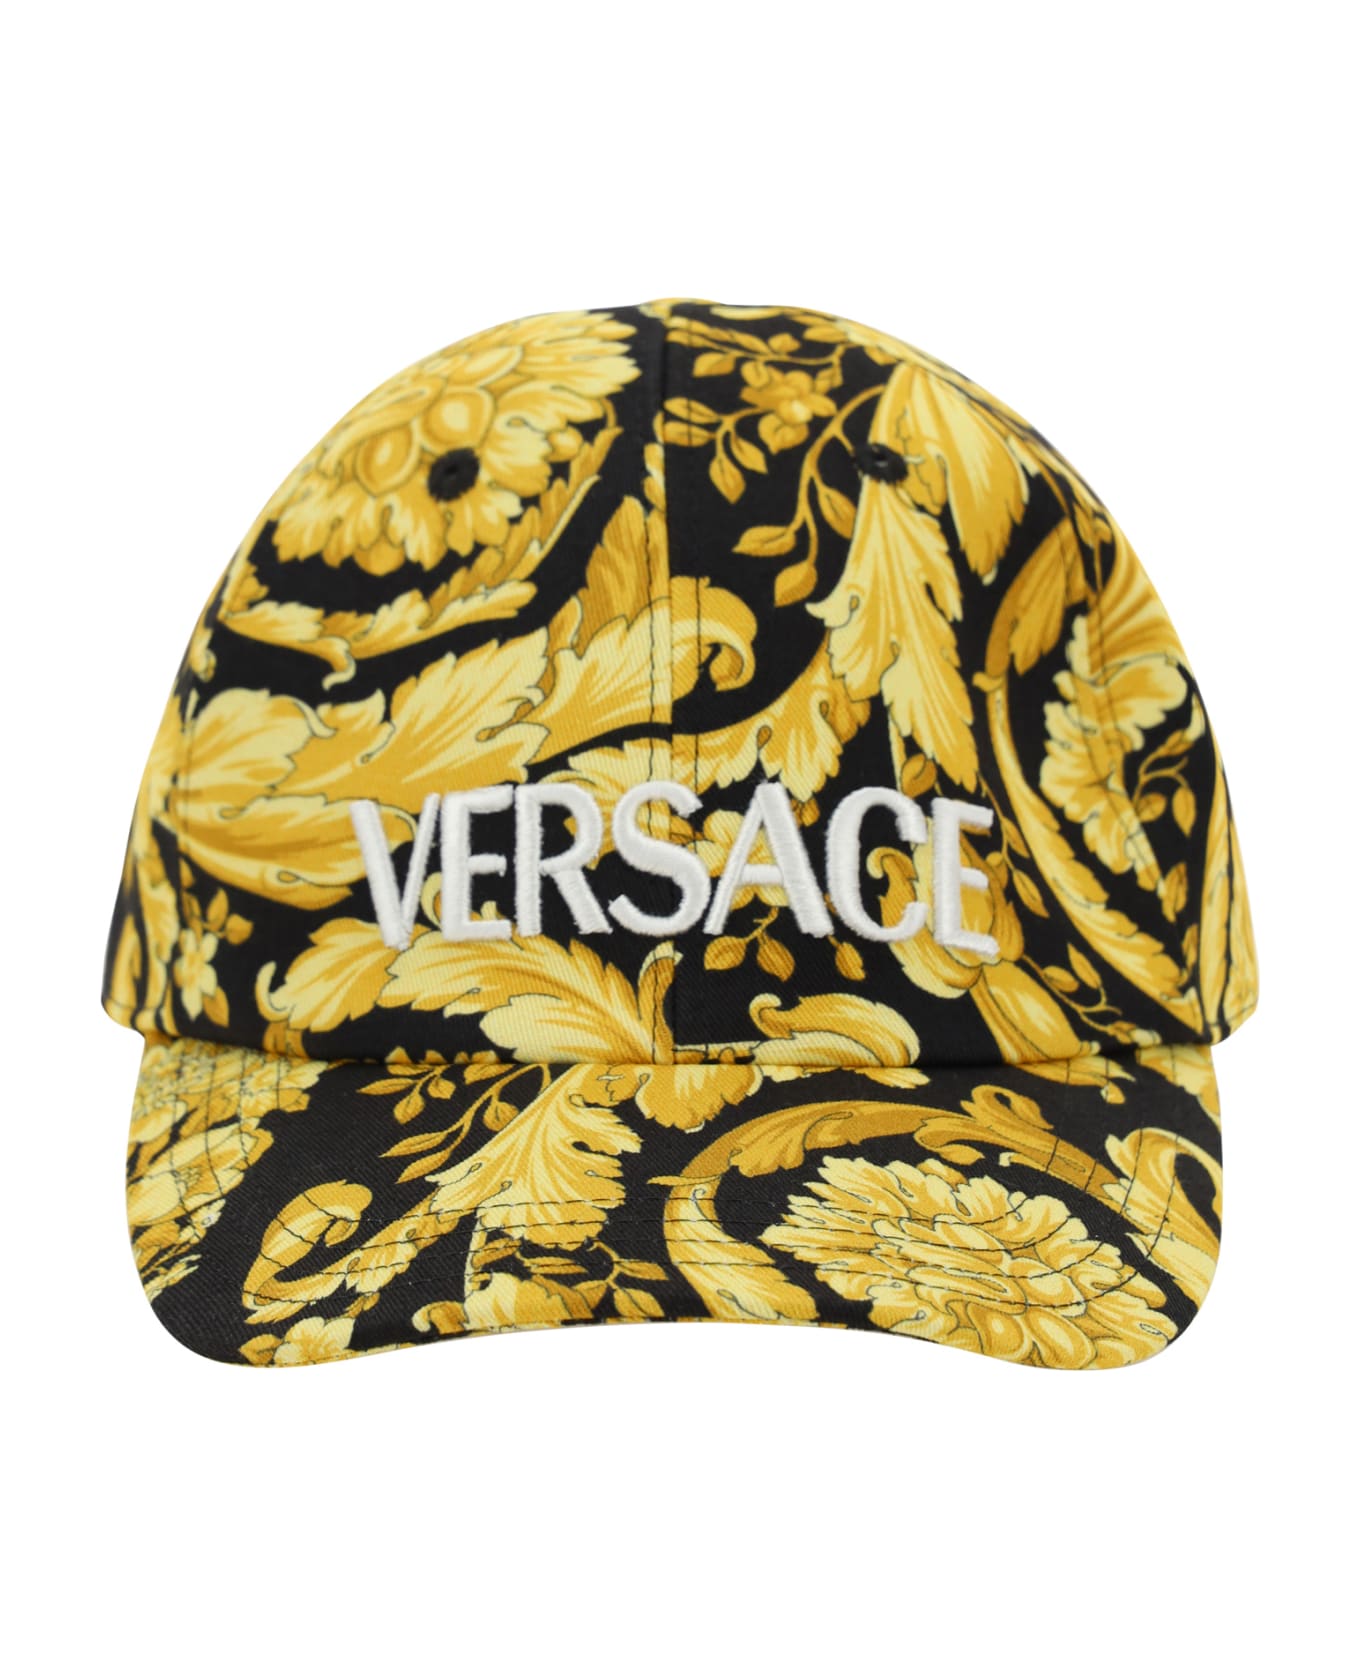 Versace Baseball Cap - Black/gold/black 帽子